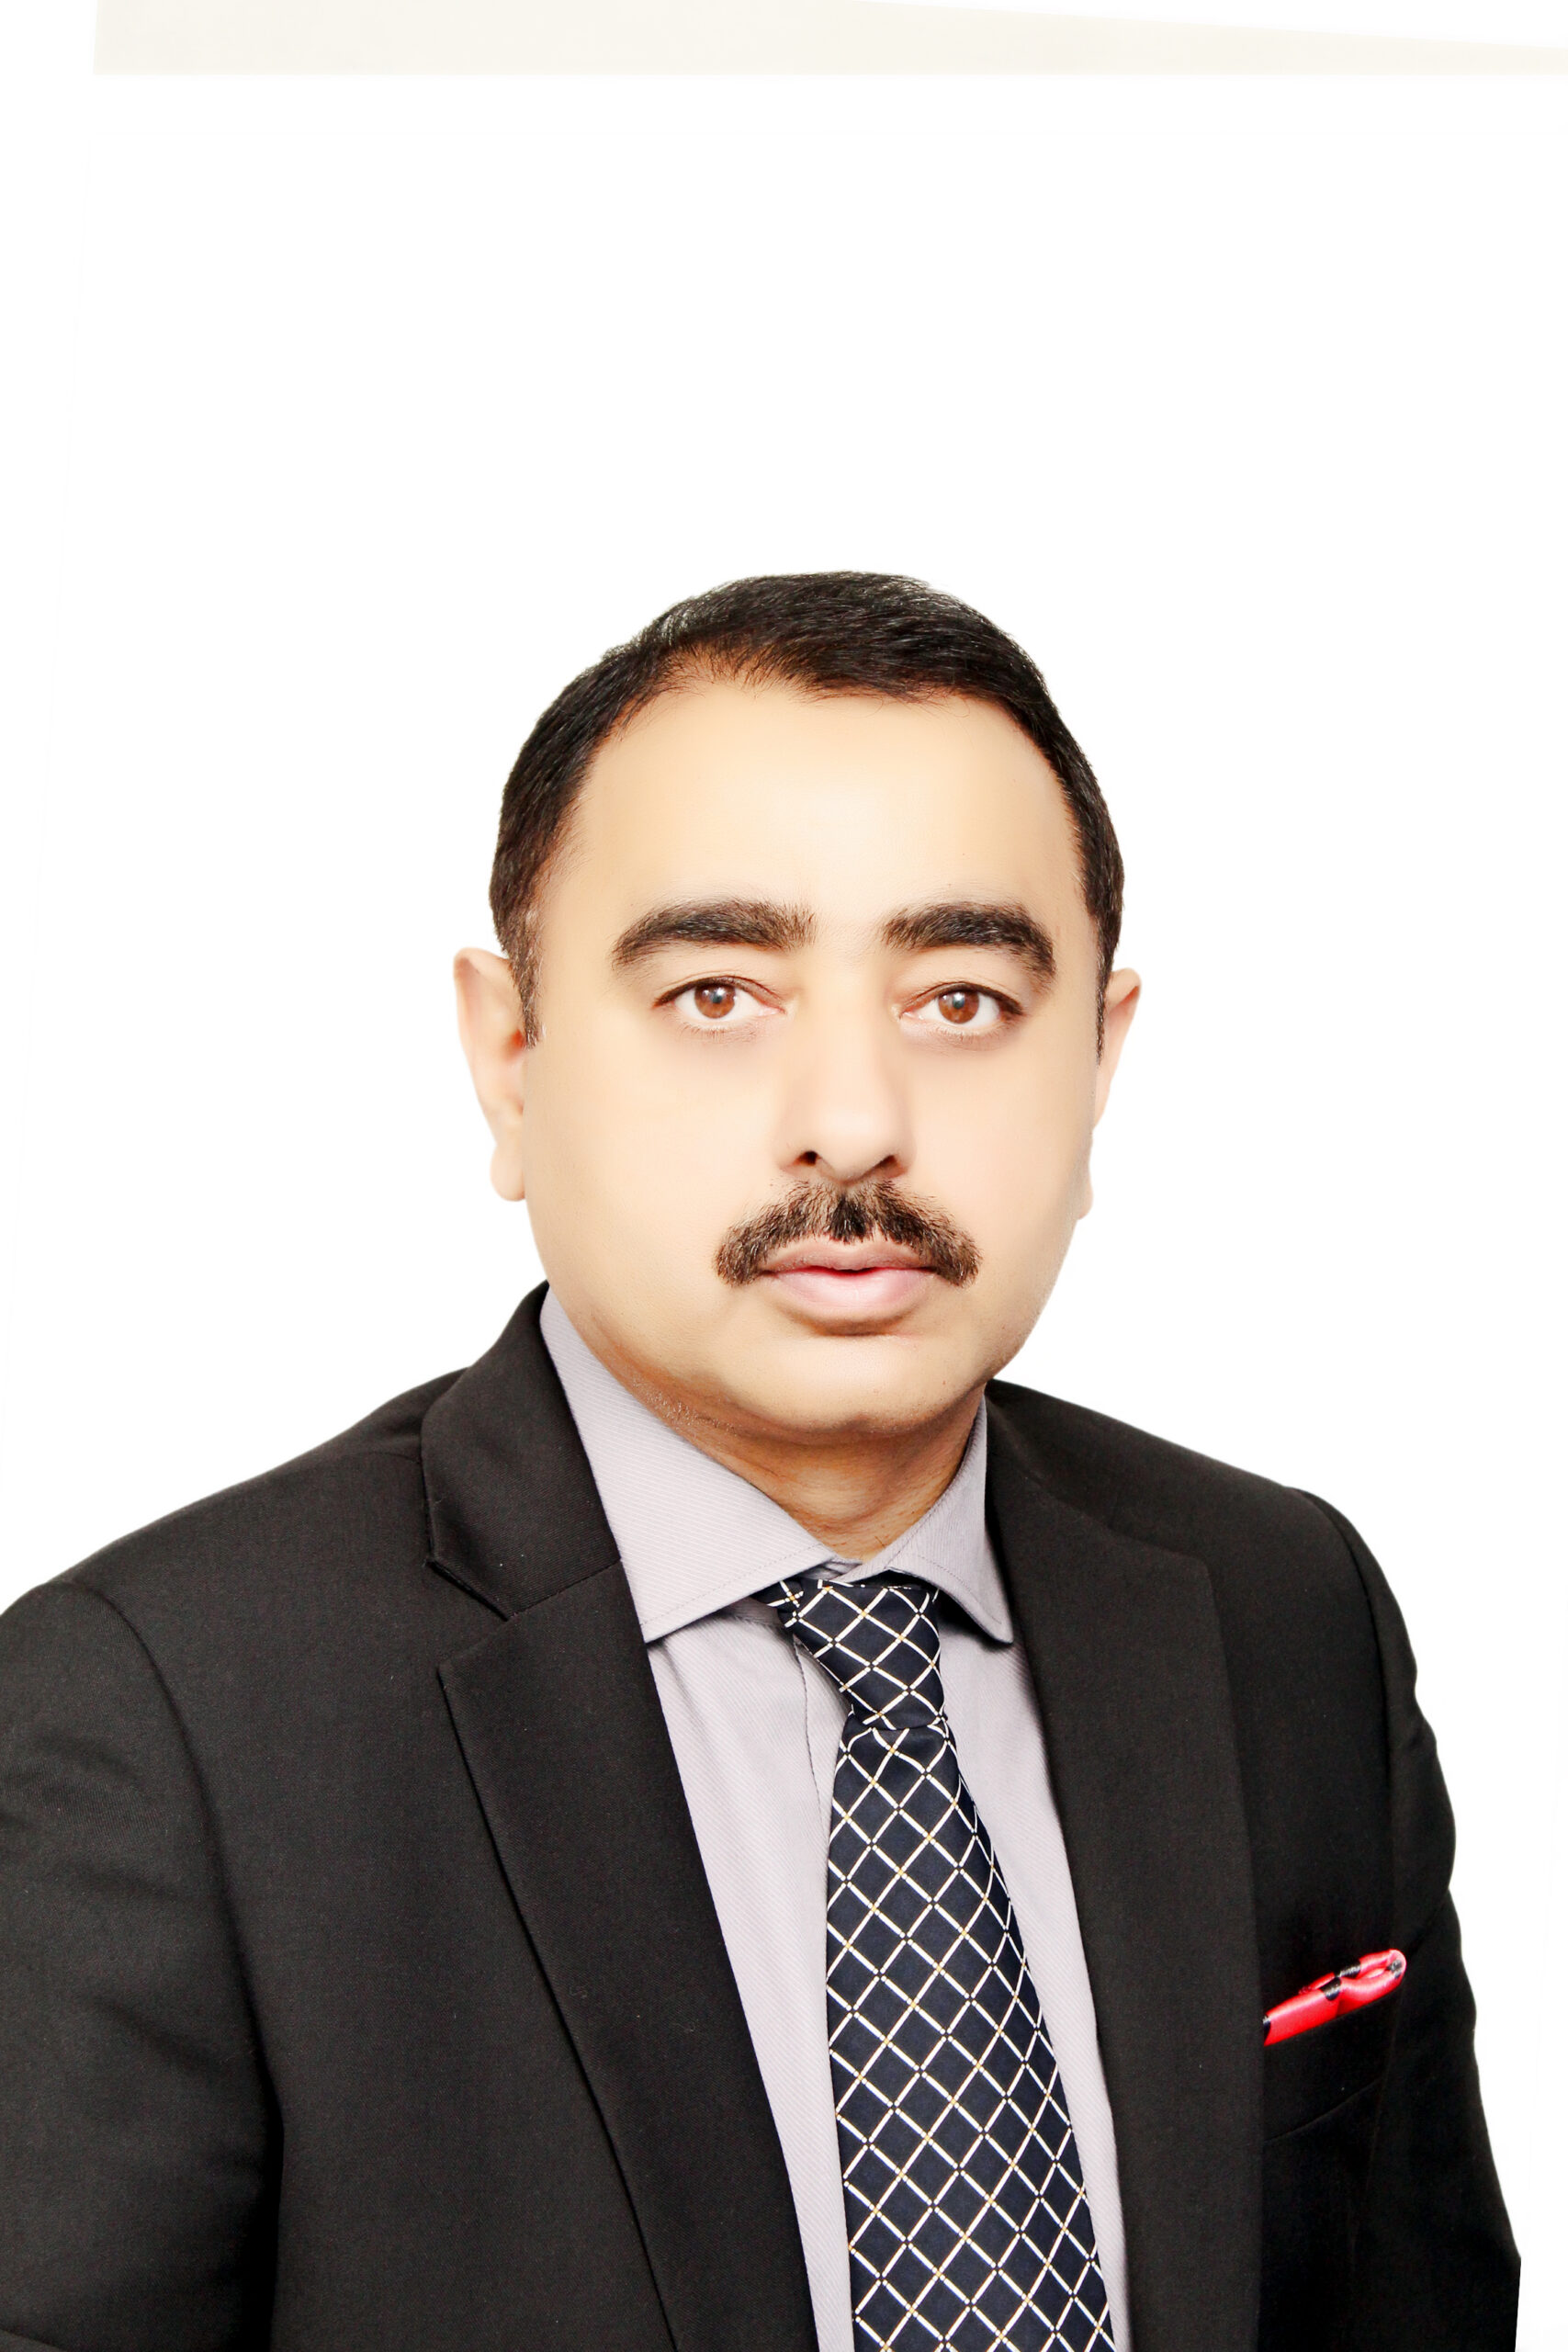 Malik Sajid Rehman